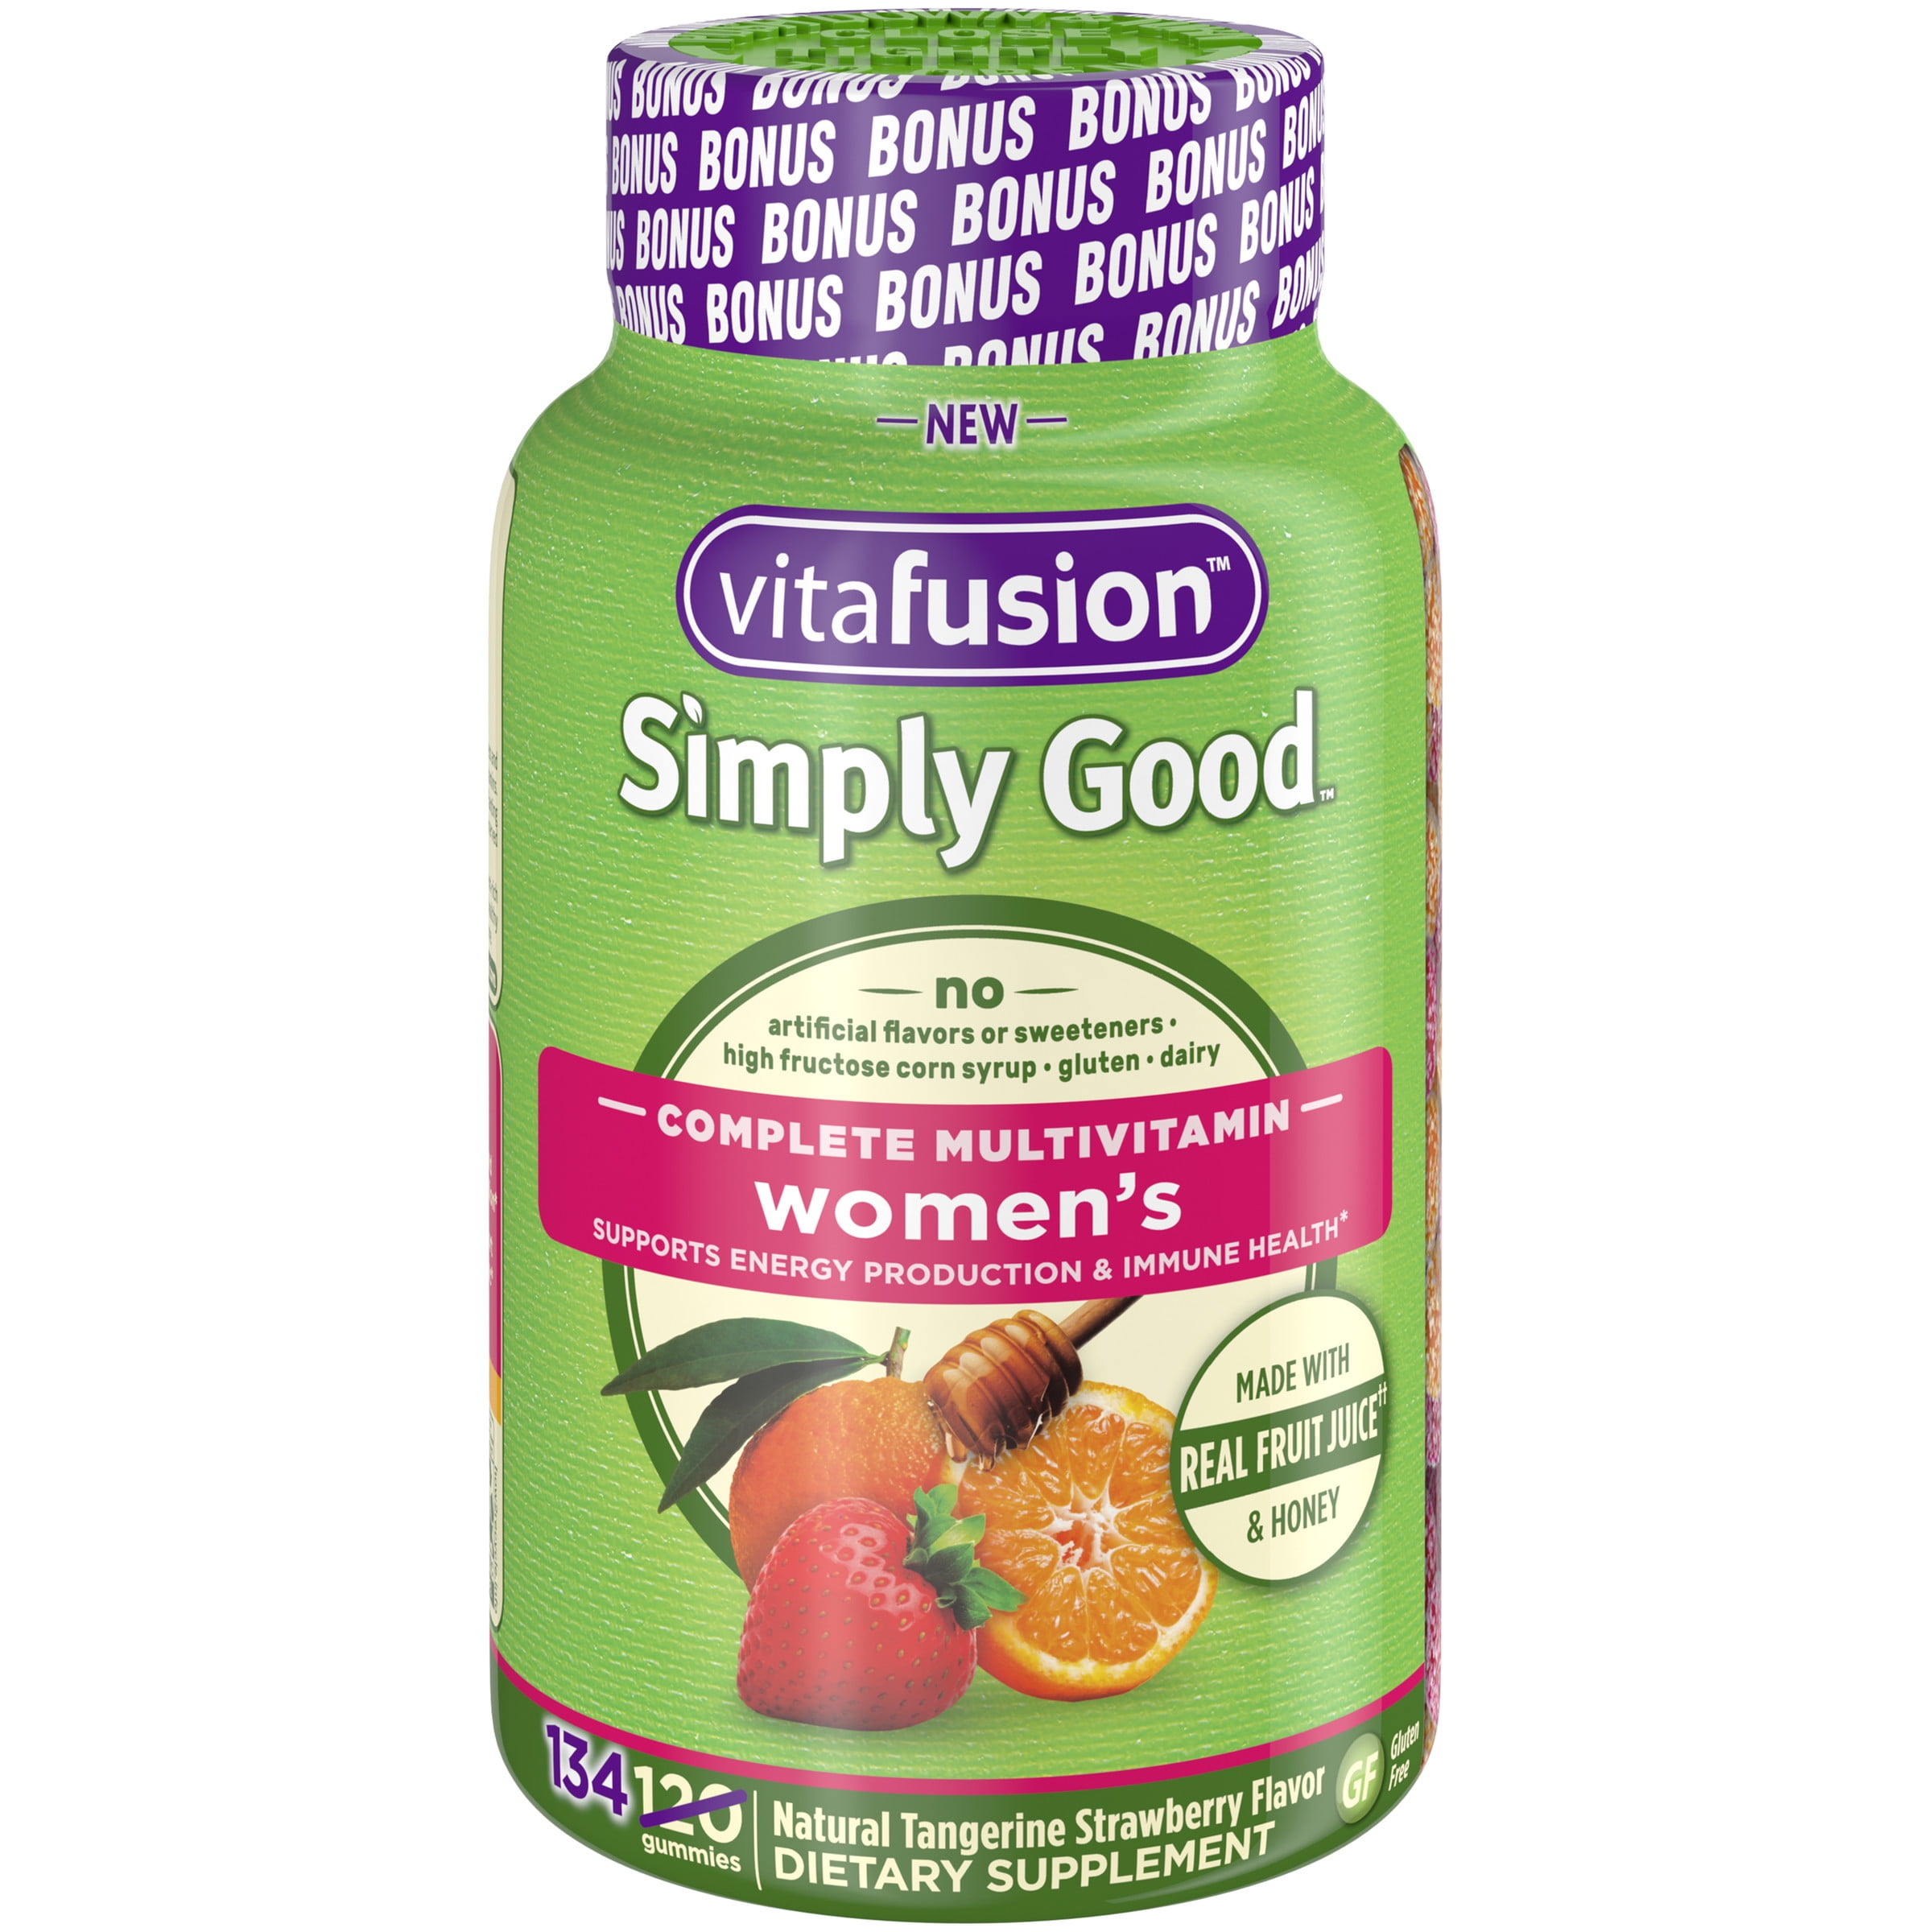 Vitafusion Simply Good Women's Multivitamin Gummy Vitamins, 134ct